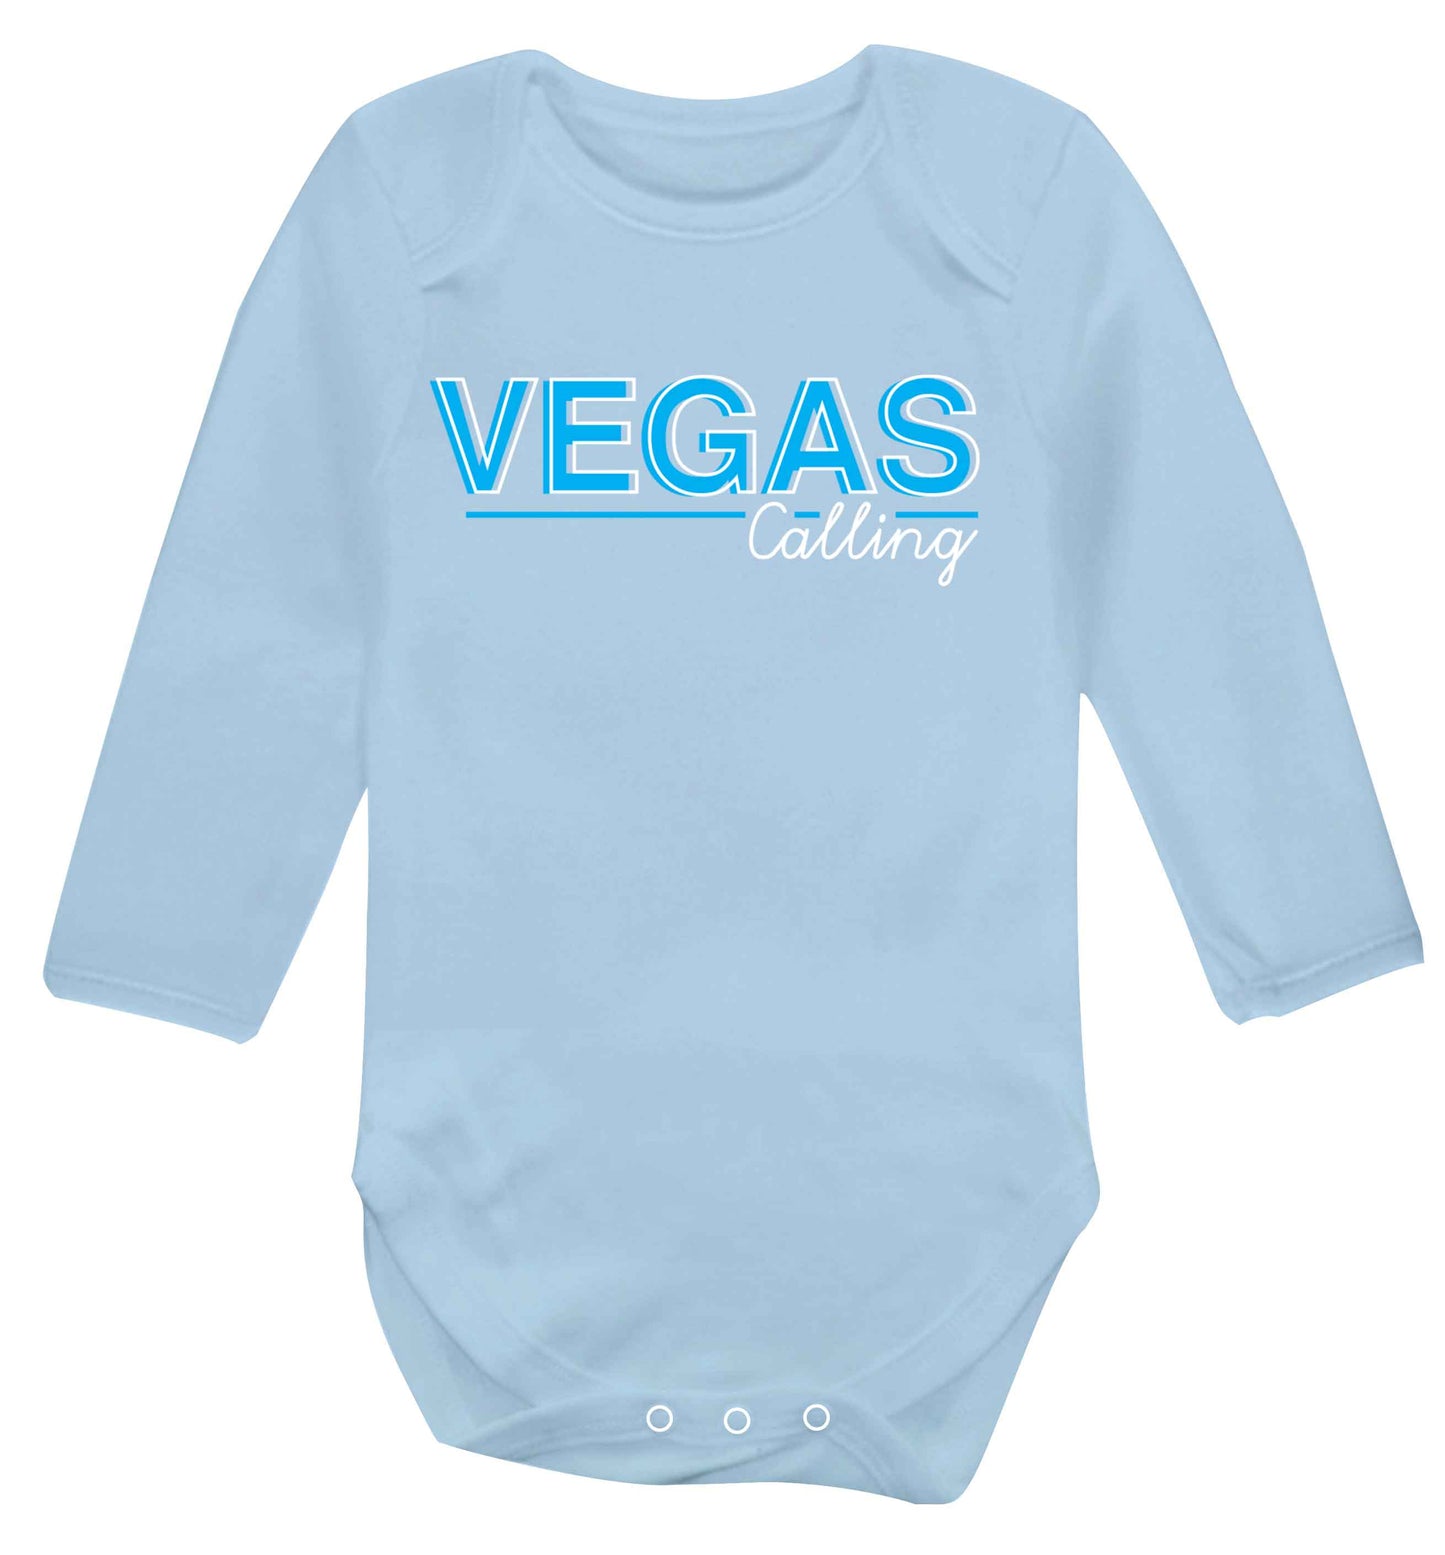 Vegas calling Baby Vest long sleeved pale blue 6-12 months